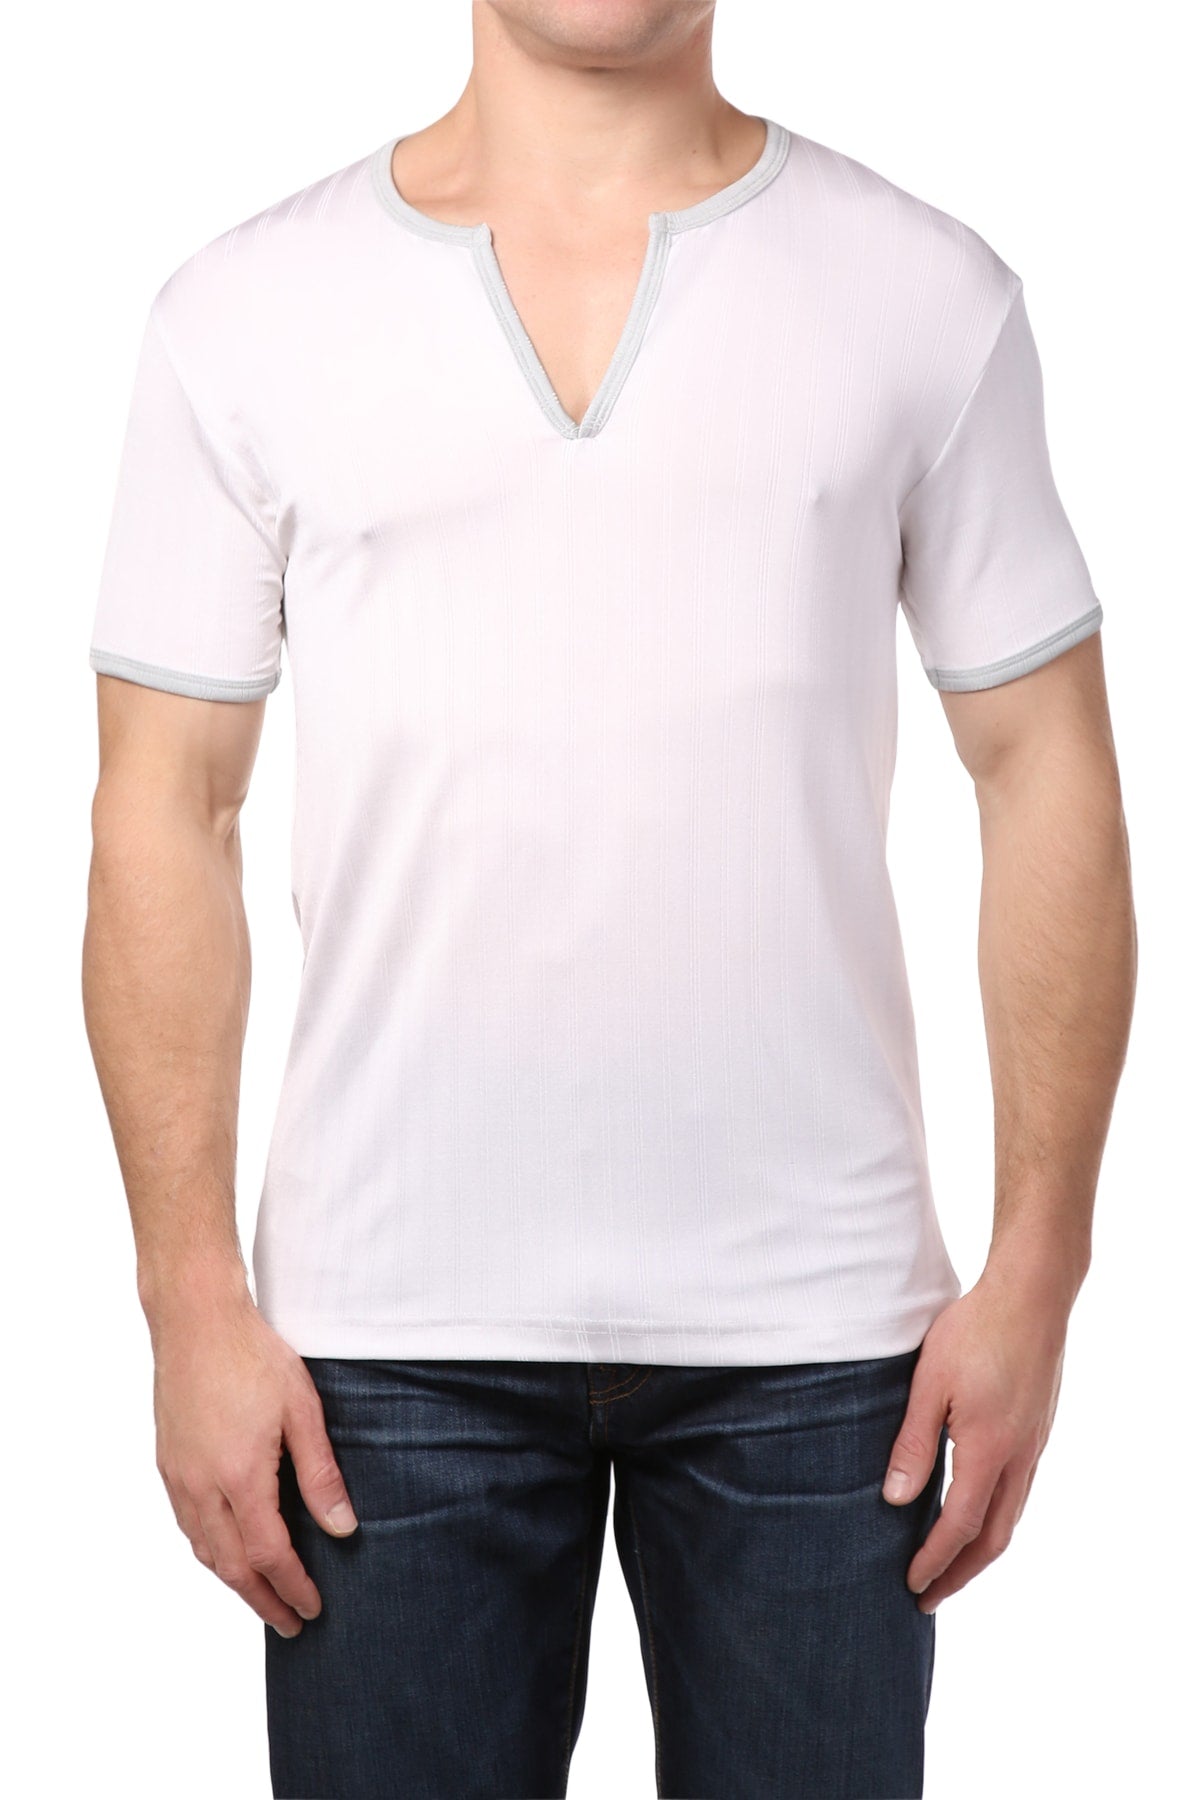 Andres Velasco White Contrast Trim Shirt